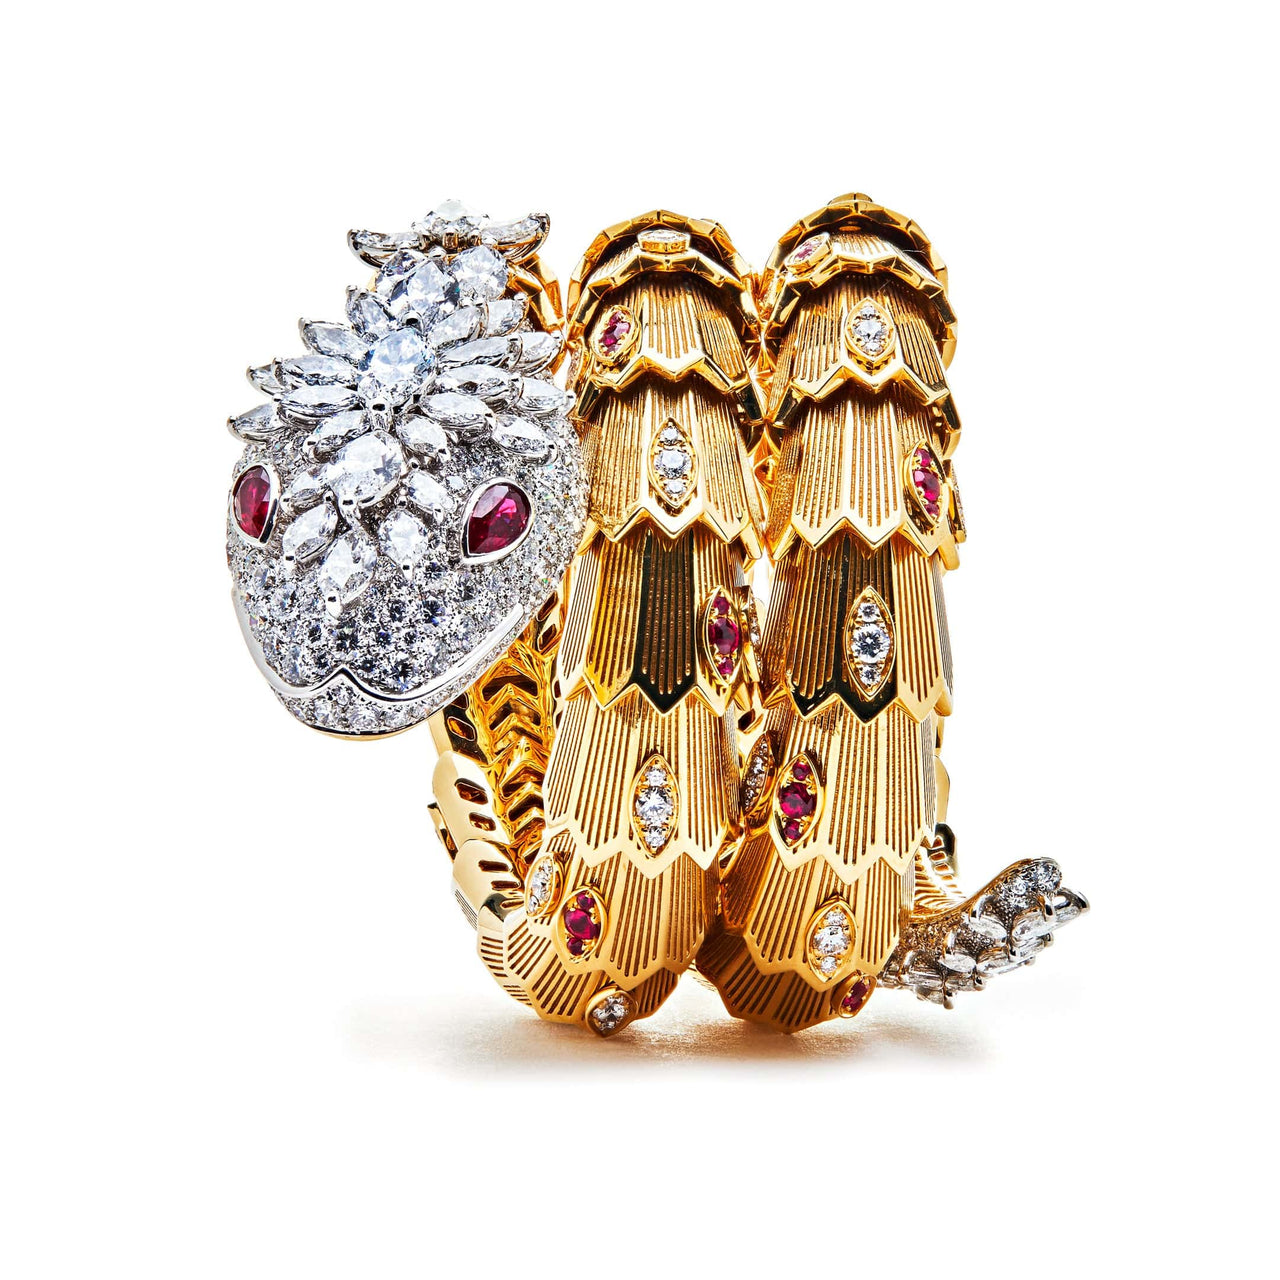 Bulgari Serpenti 75 anniversary Serpenti bracelet rose gold and diamonds |  Bulgari | The Jewellery Editor